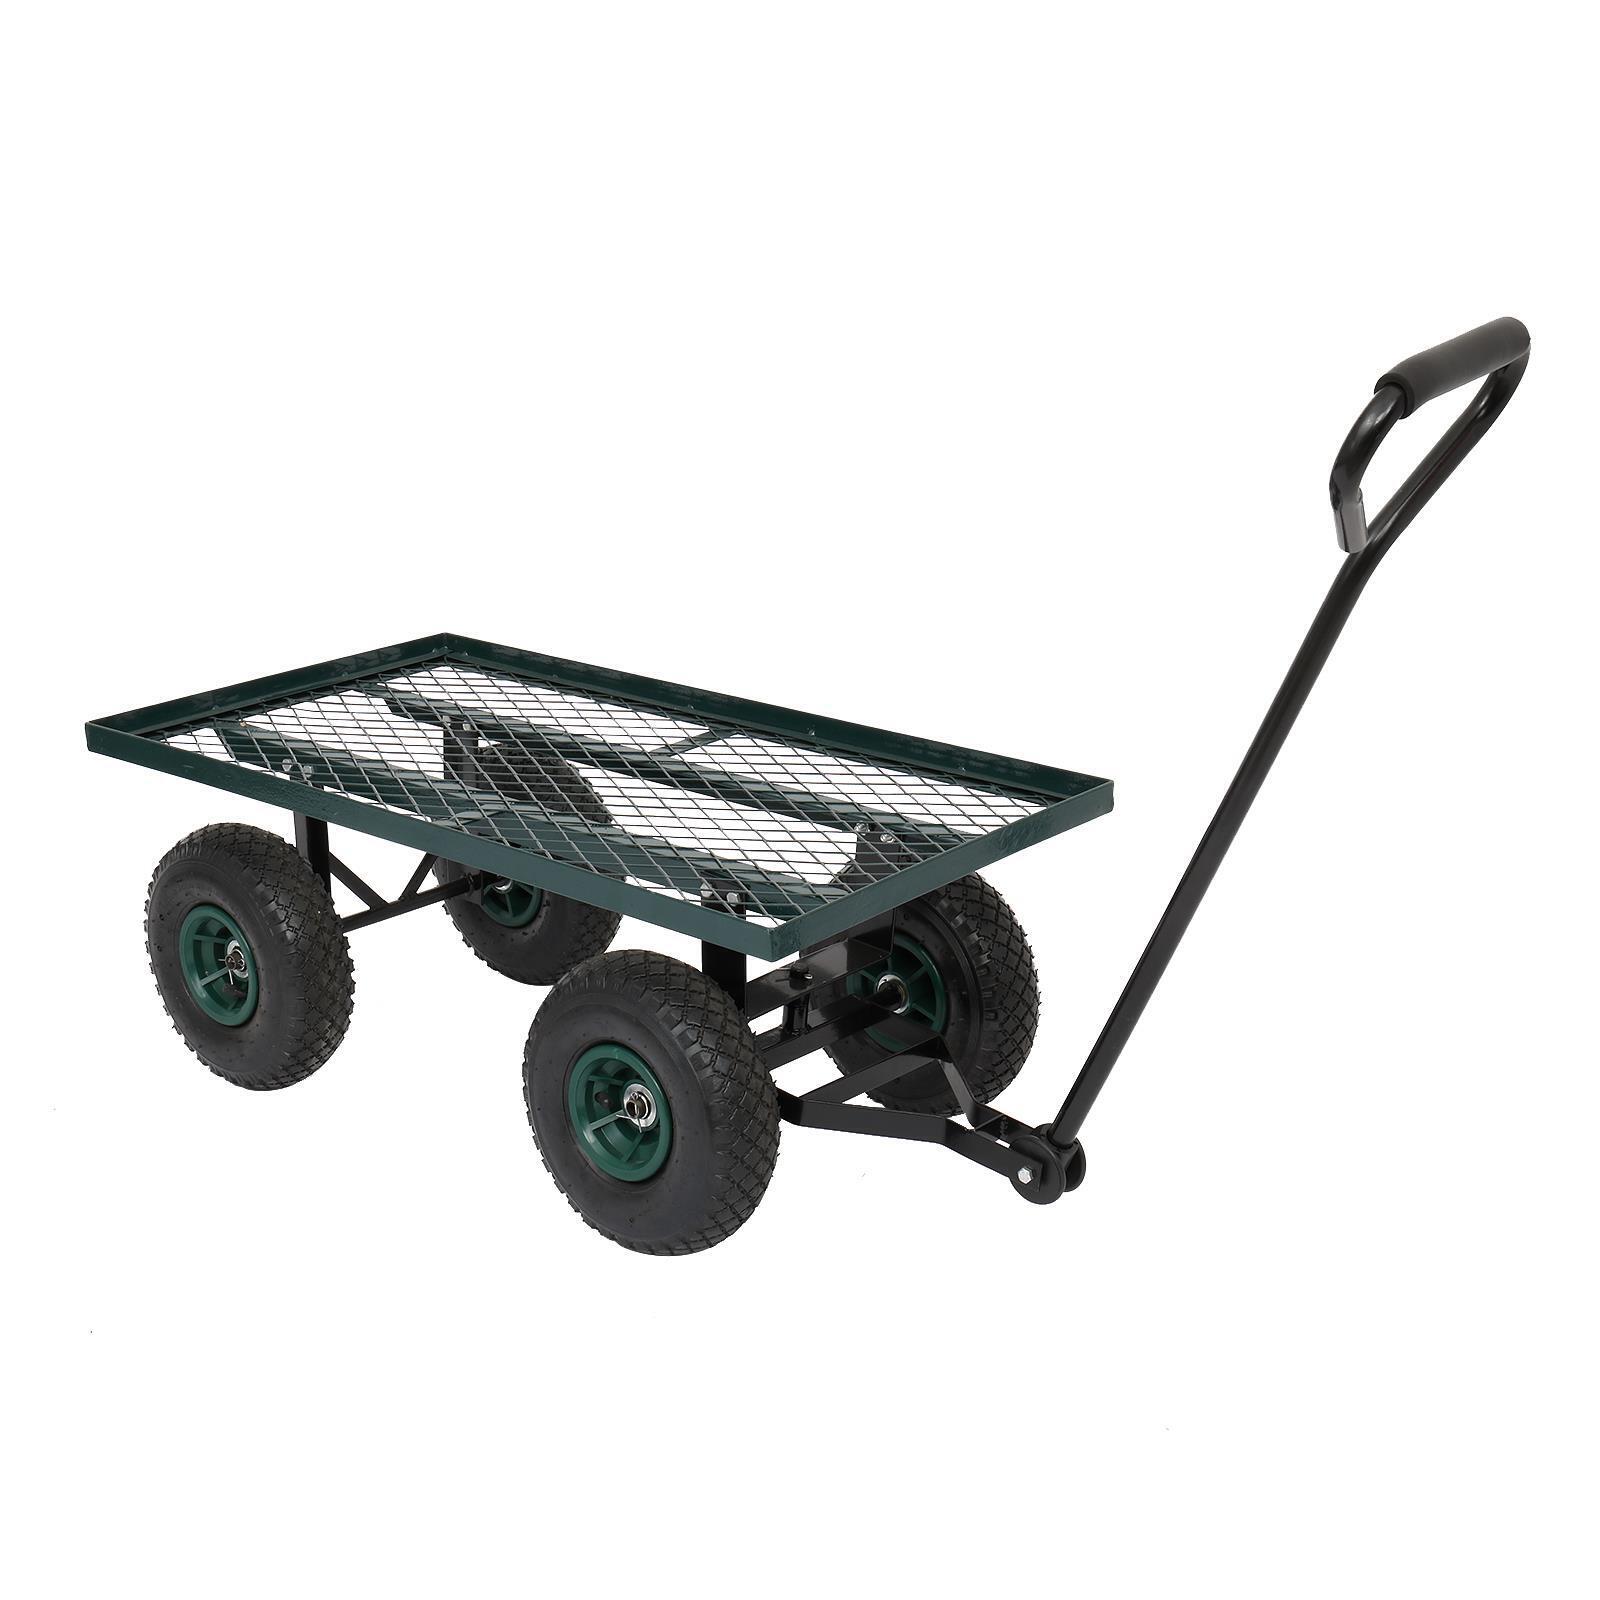 thinkstar High Quality 38" Garden Carts Yard Dump Wagon Cart Lawn Utility Cart Outdoor